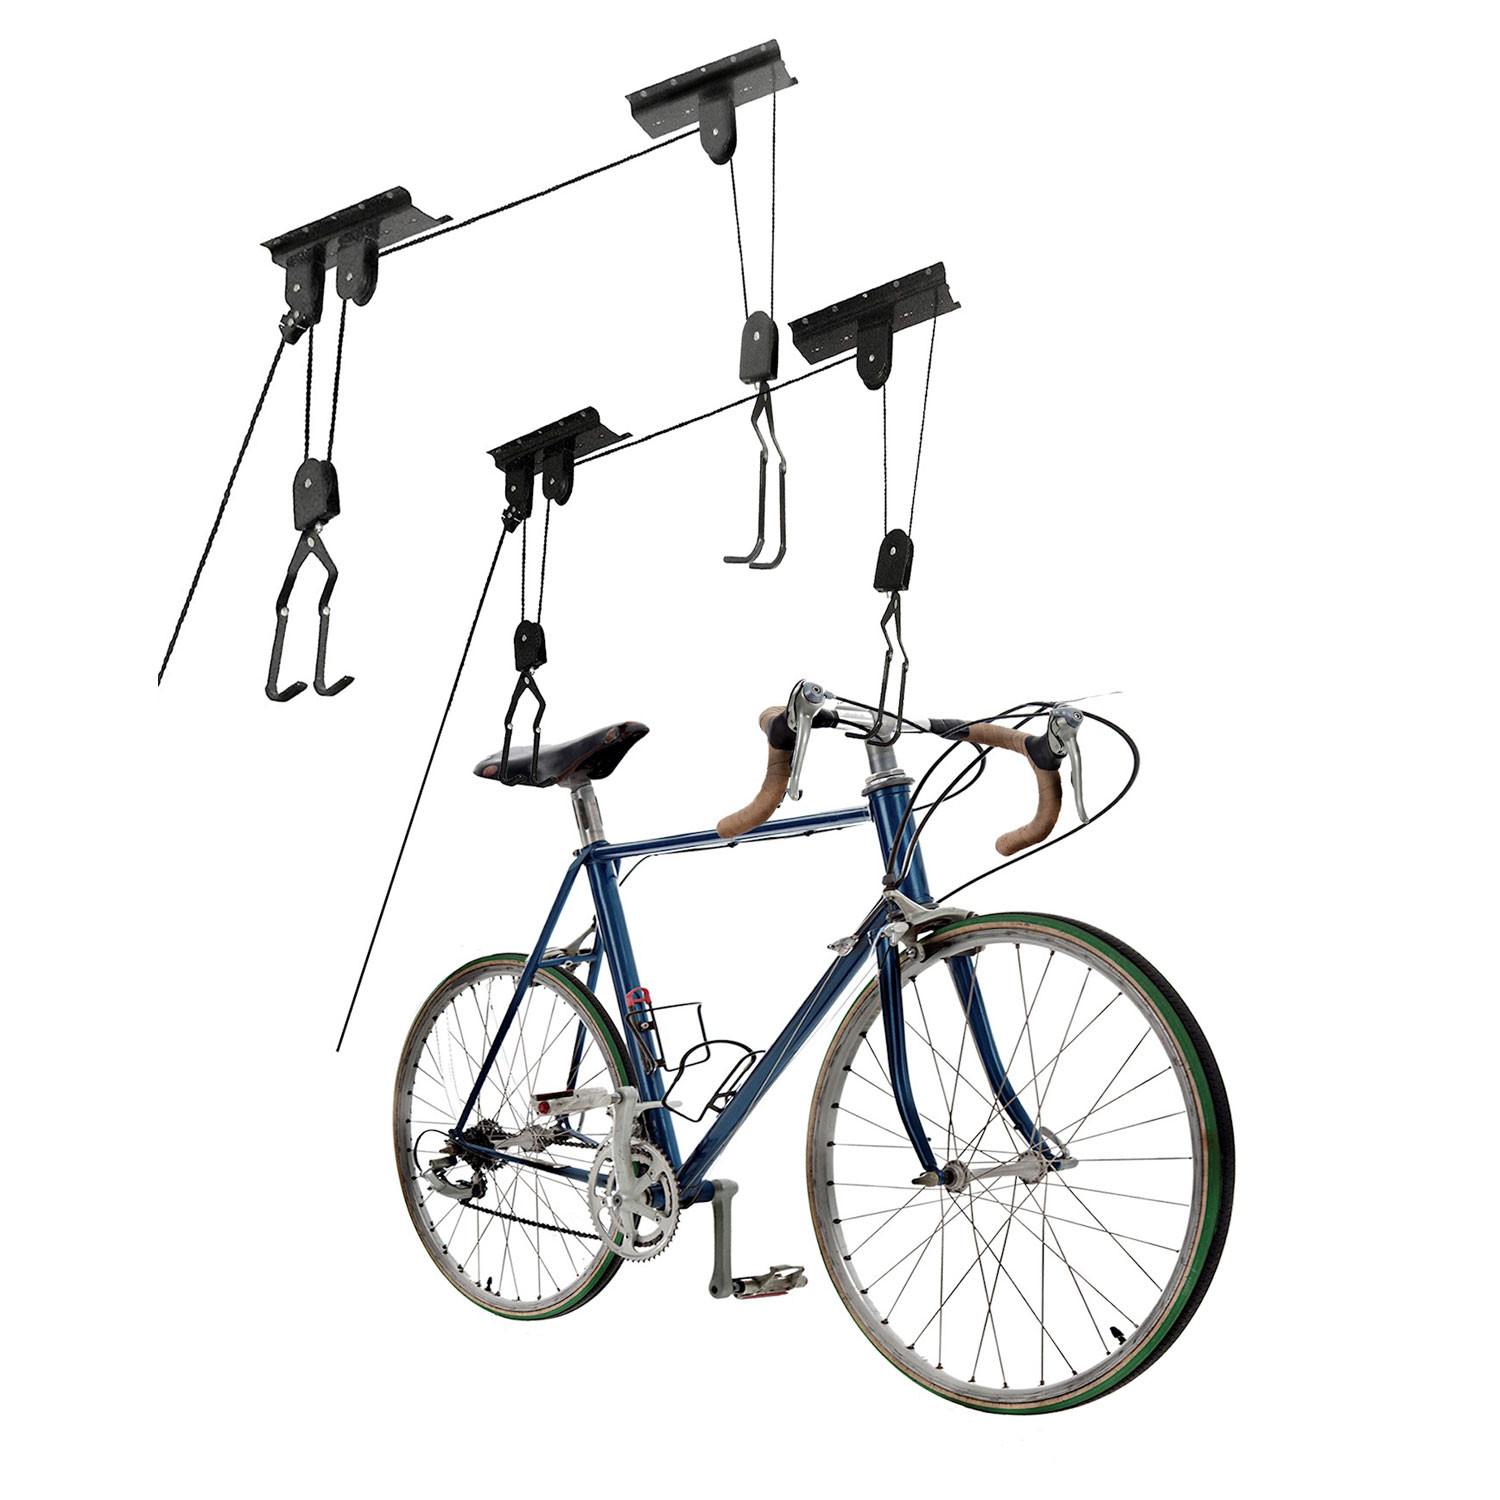 Great Working Tools Bike Hoists Set Of 2 Hanging Ceiling Mount